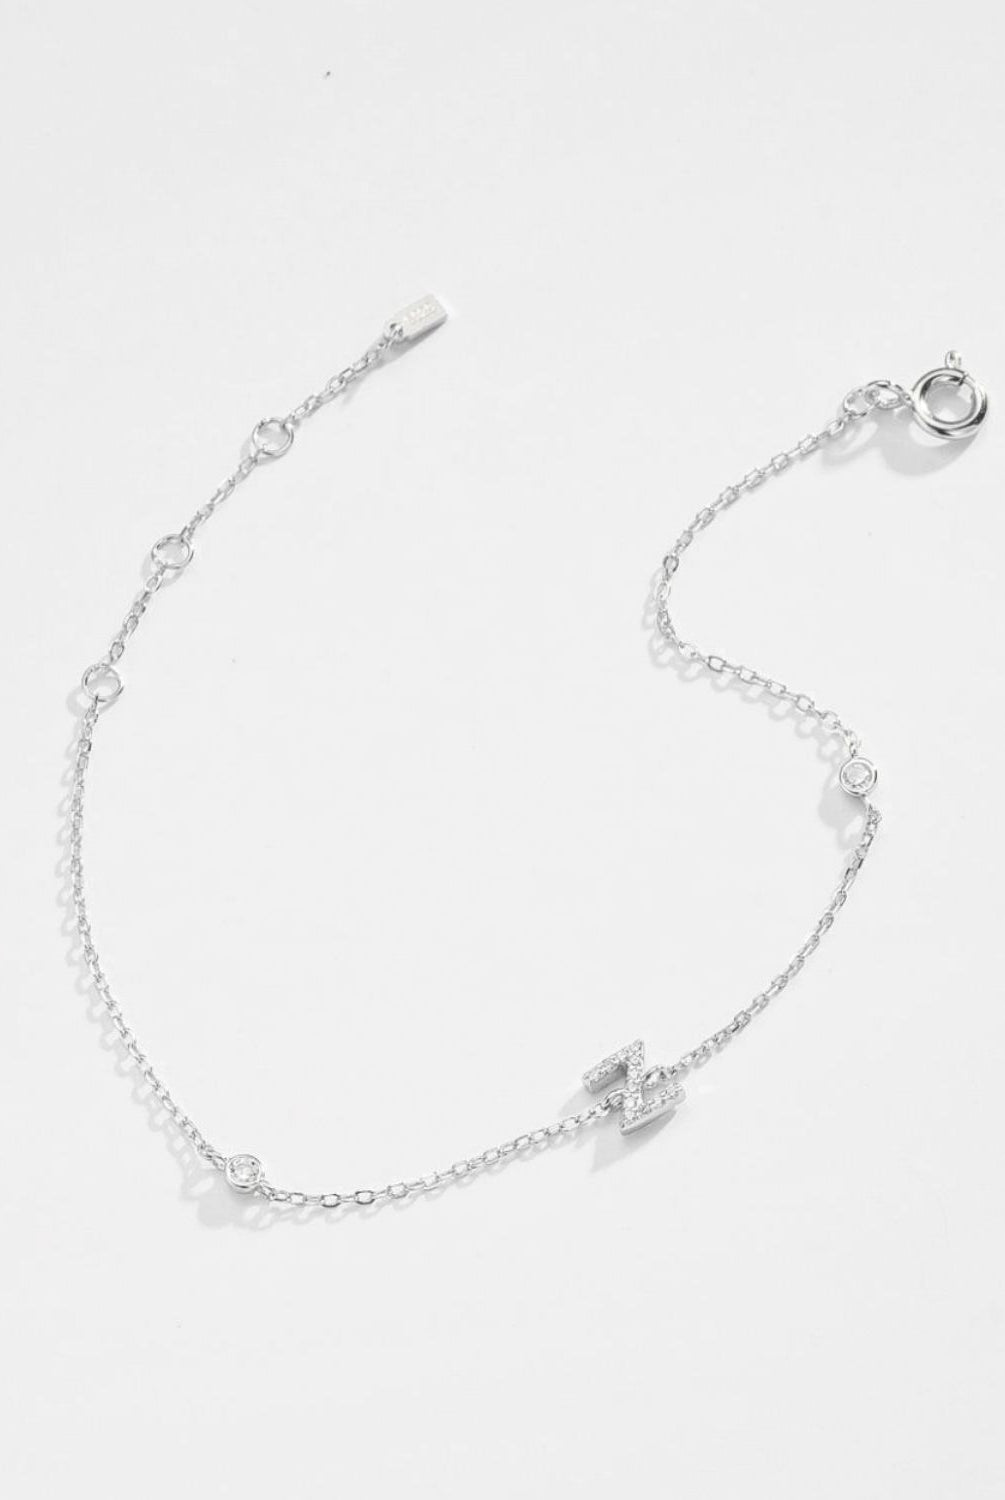 V To Z Zircon 925 Sterling Silver Bracelet - GemThreads Boutique